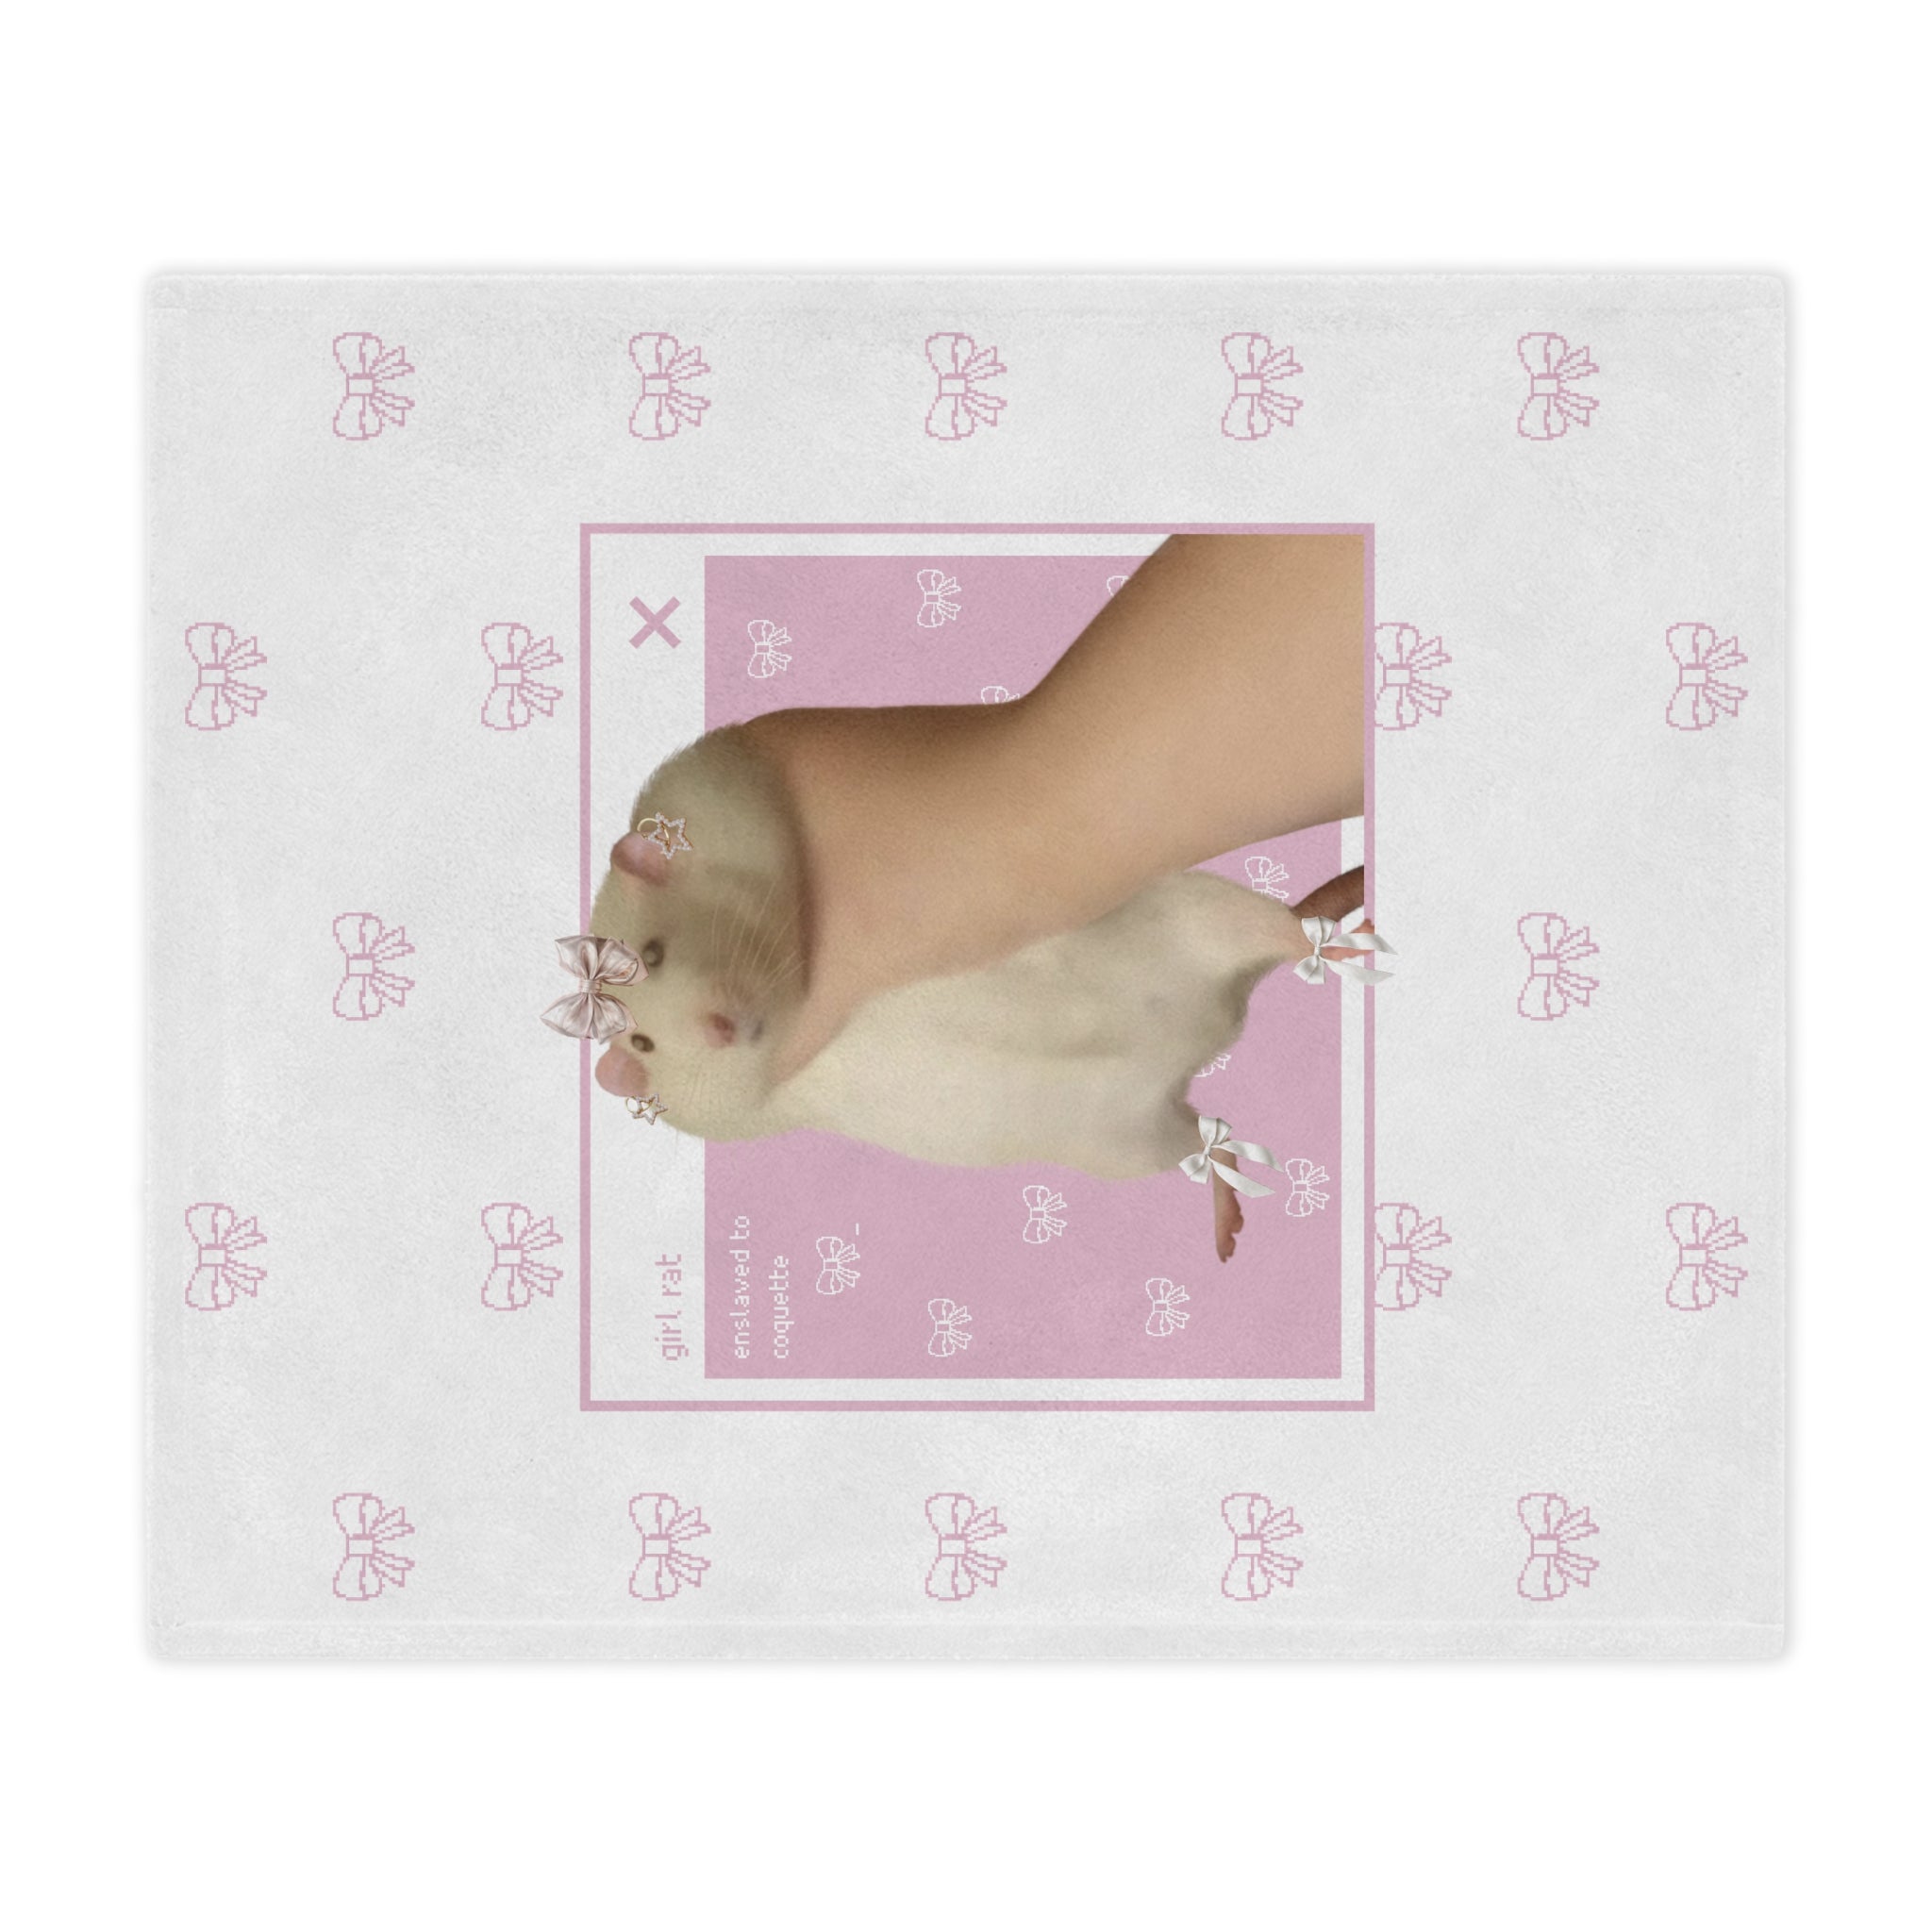 Soft Coquette Pixel Bow Girl Rat Microfiber Blanket